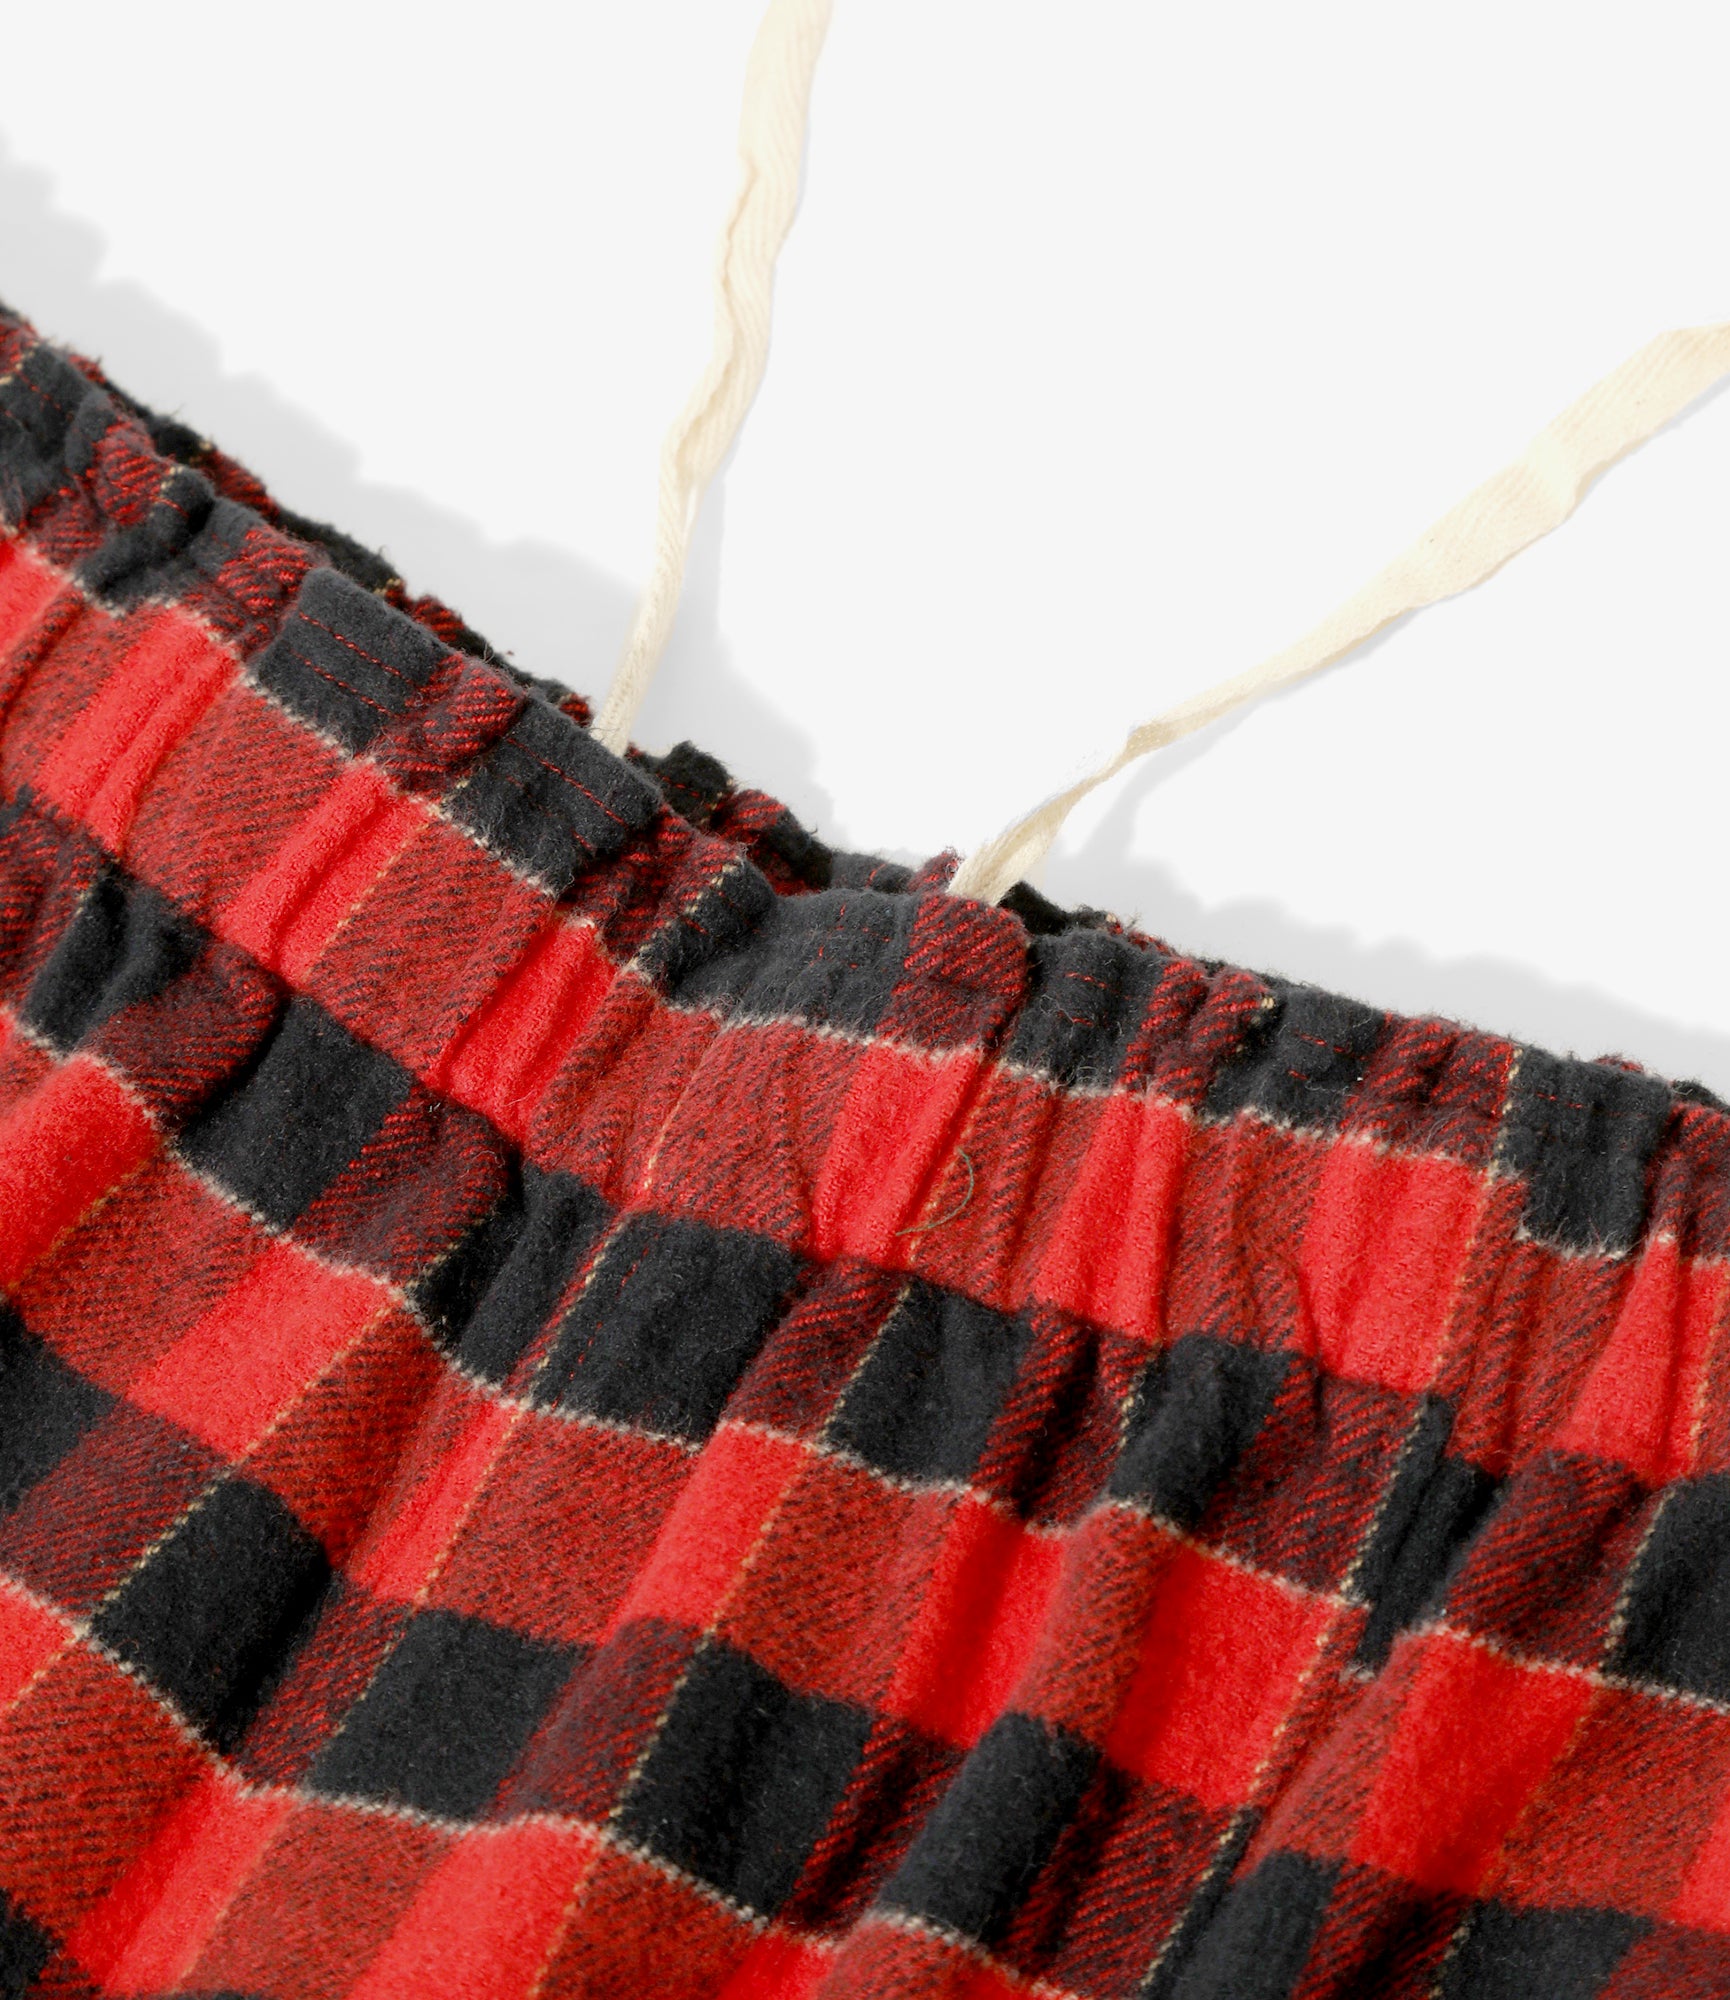 Army String Pant - Red / Black - Flannel Twill / Plaid